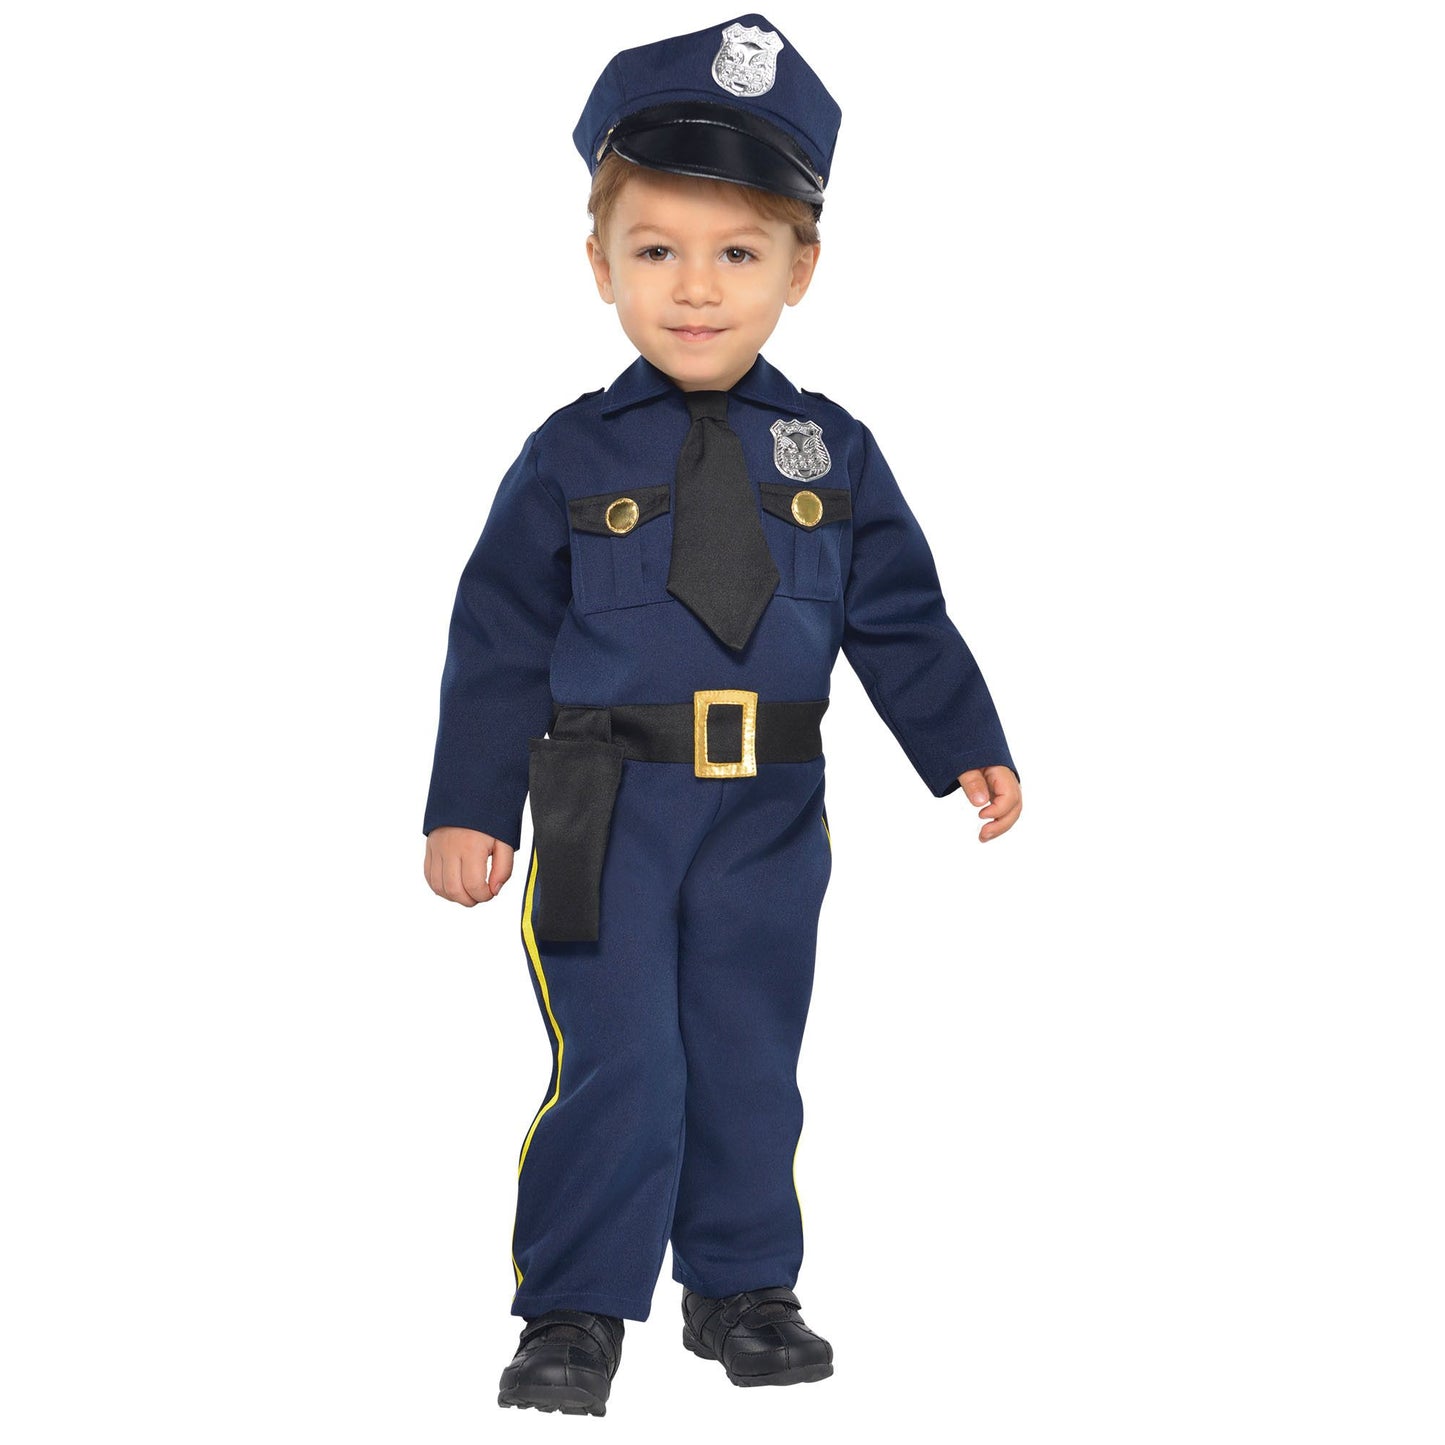 Cop Recuit Police Officer Baby Infant Costume Jumpsuit Hat